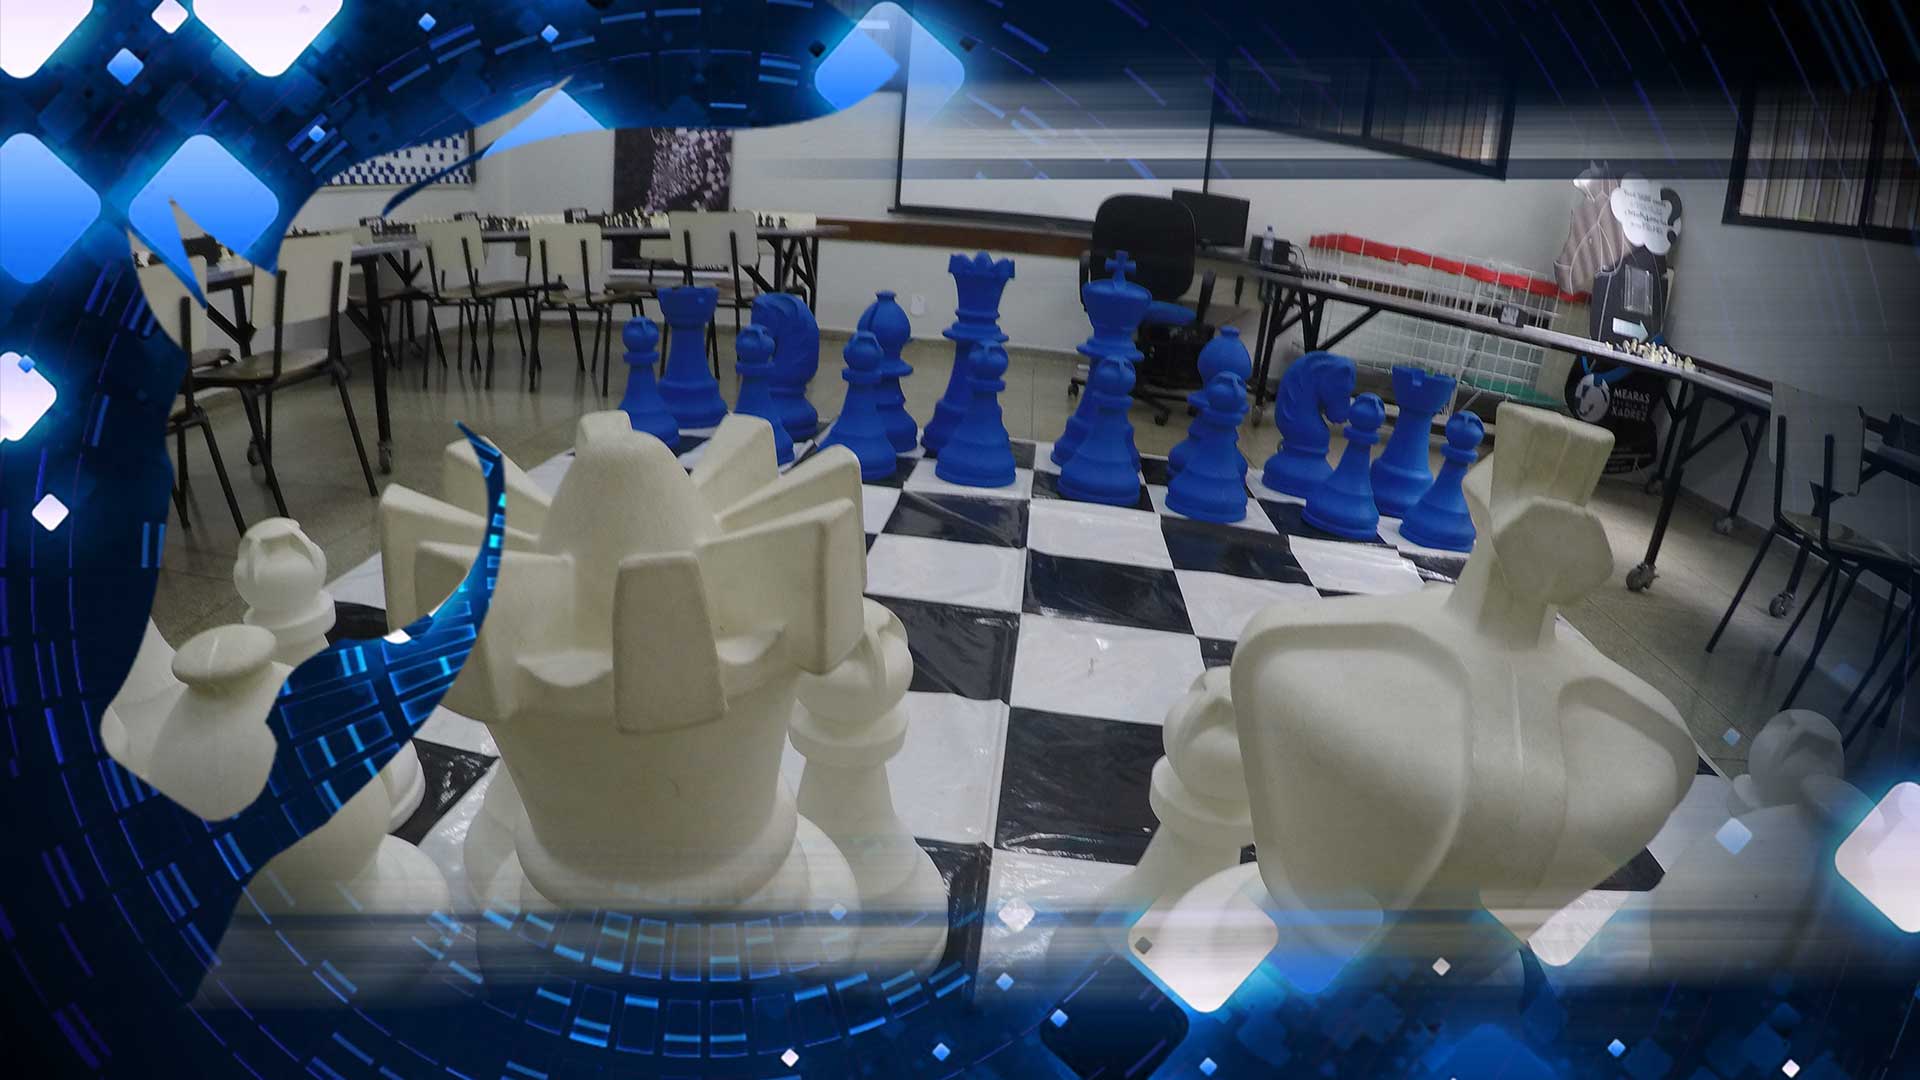 Aulas de xadrez para crianças - Mearas Escola de Xadrez